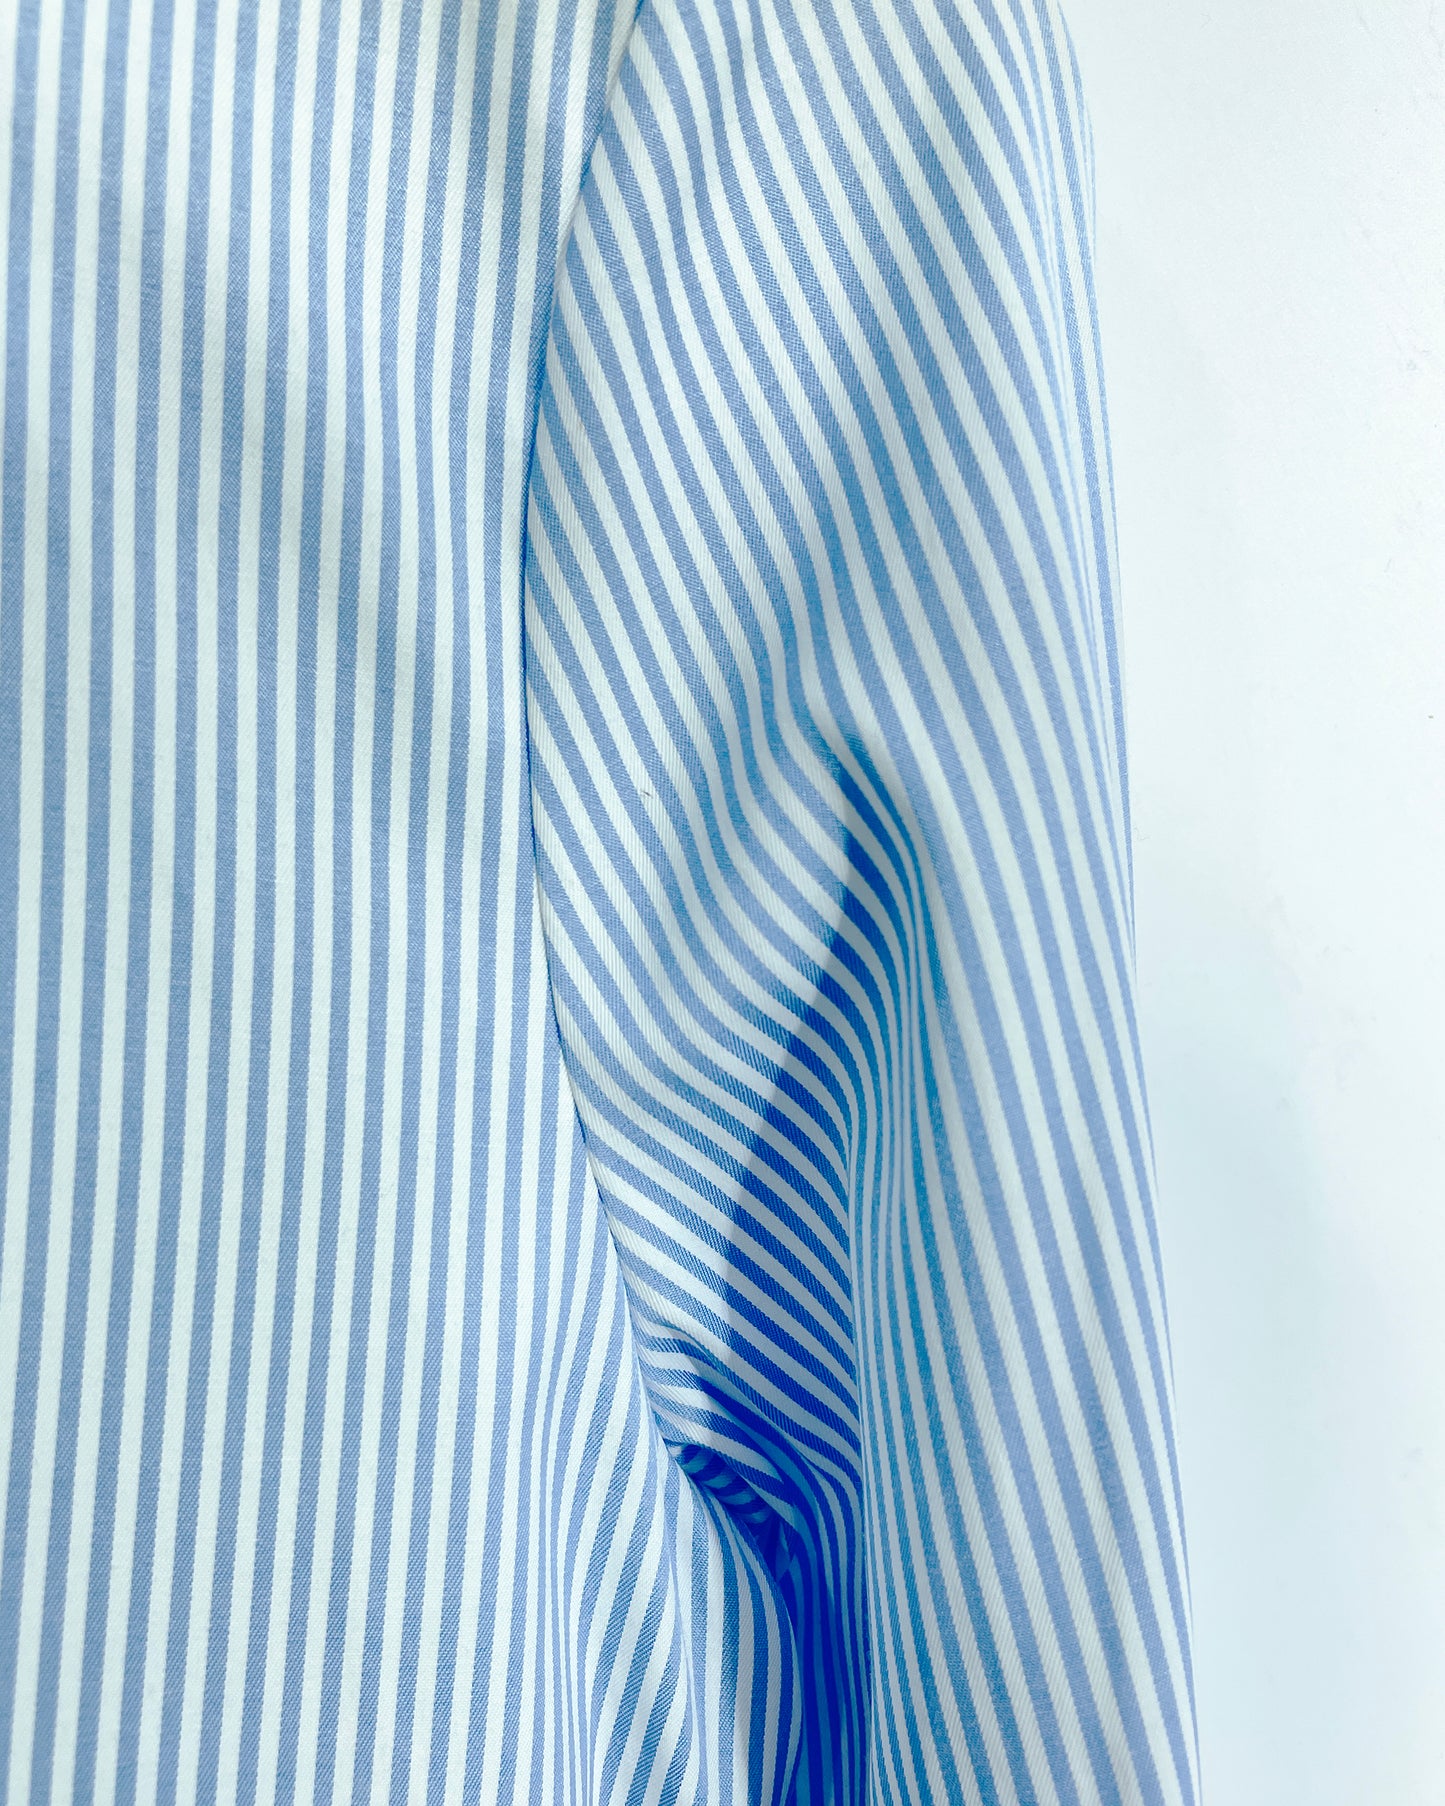 Stripe double collar blue shirt